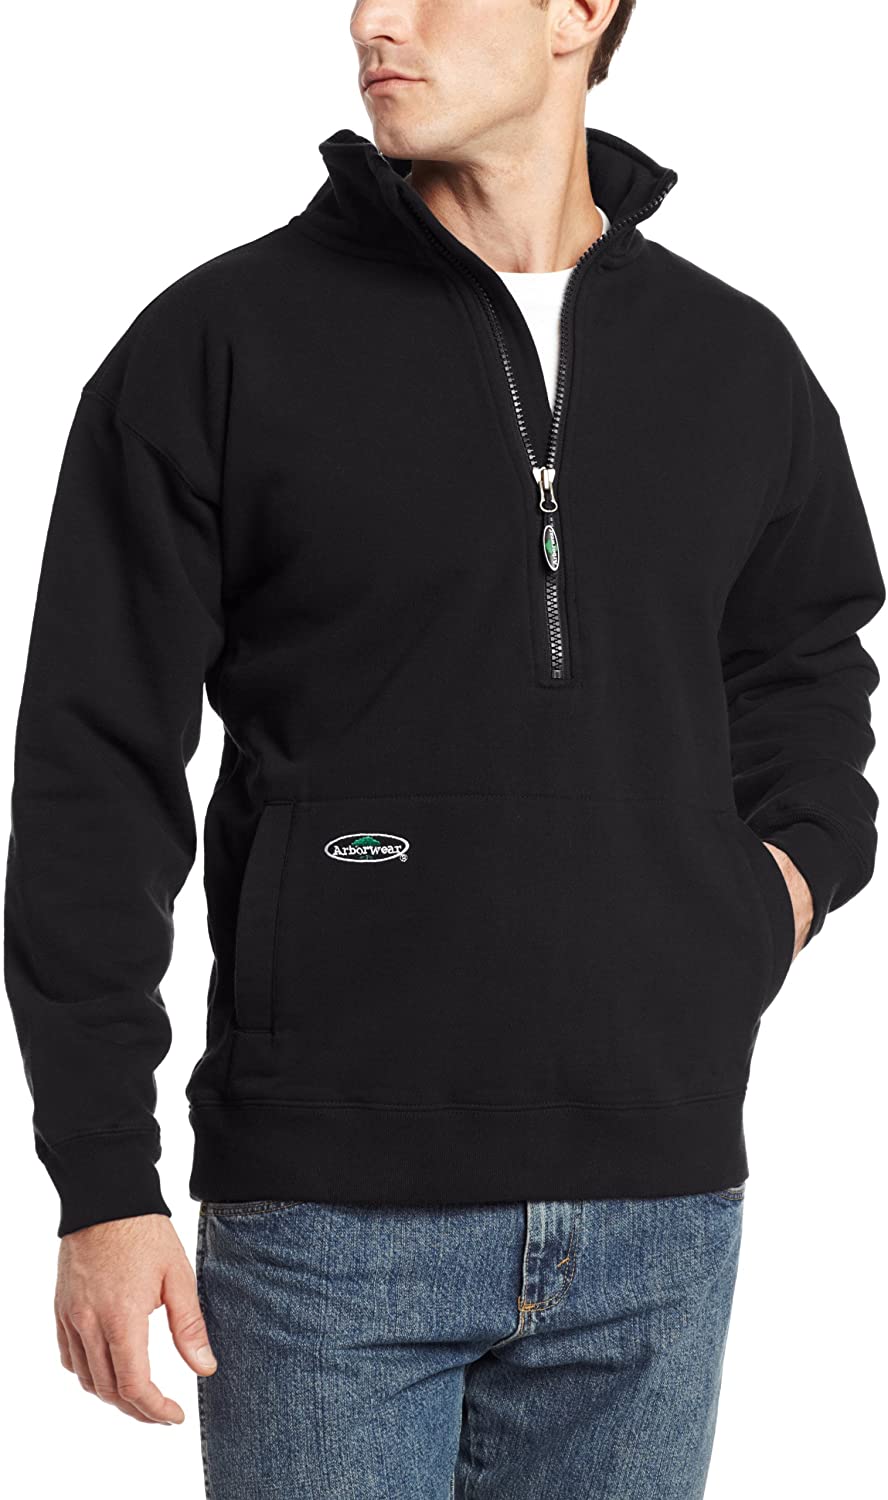 Arborwear Men's Double Thick 1/2 Zip Sweatshirt in Black from the from